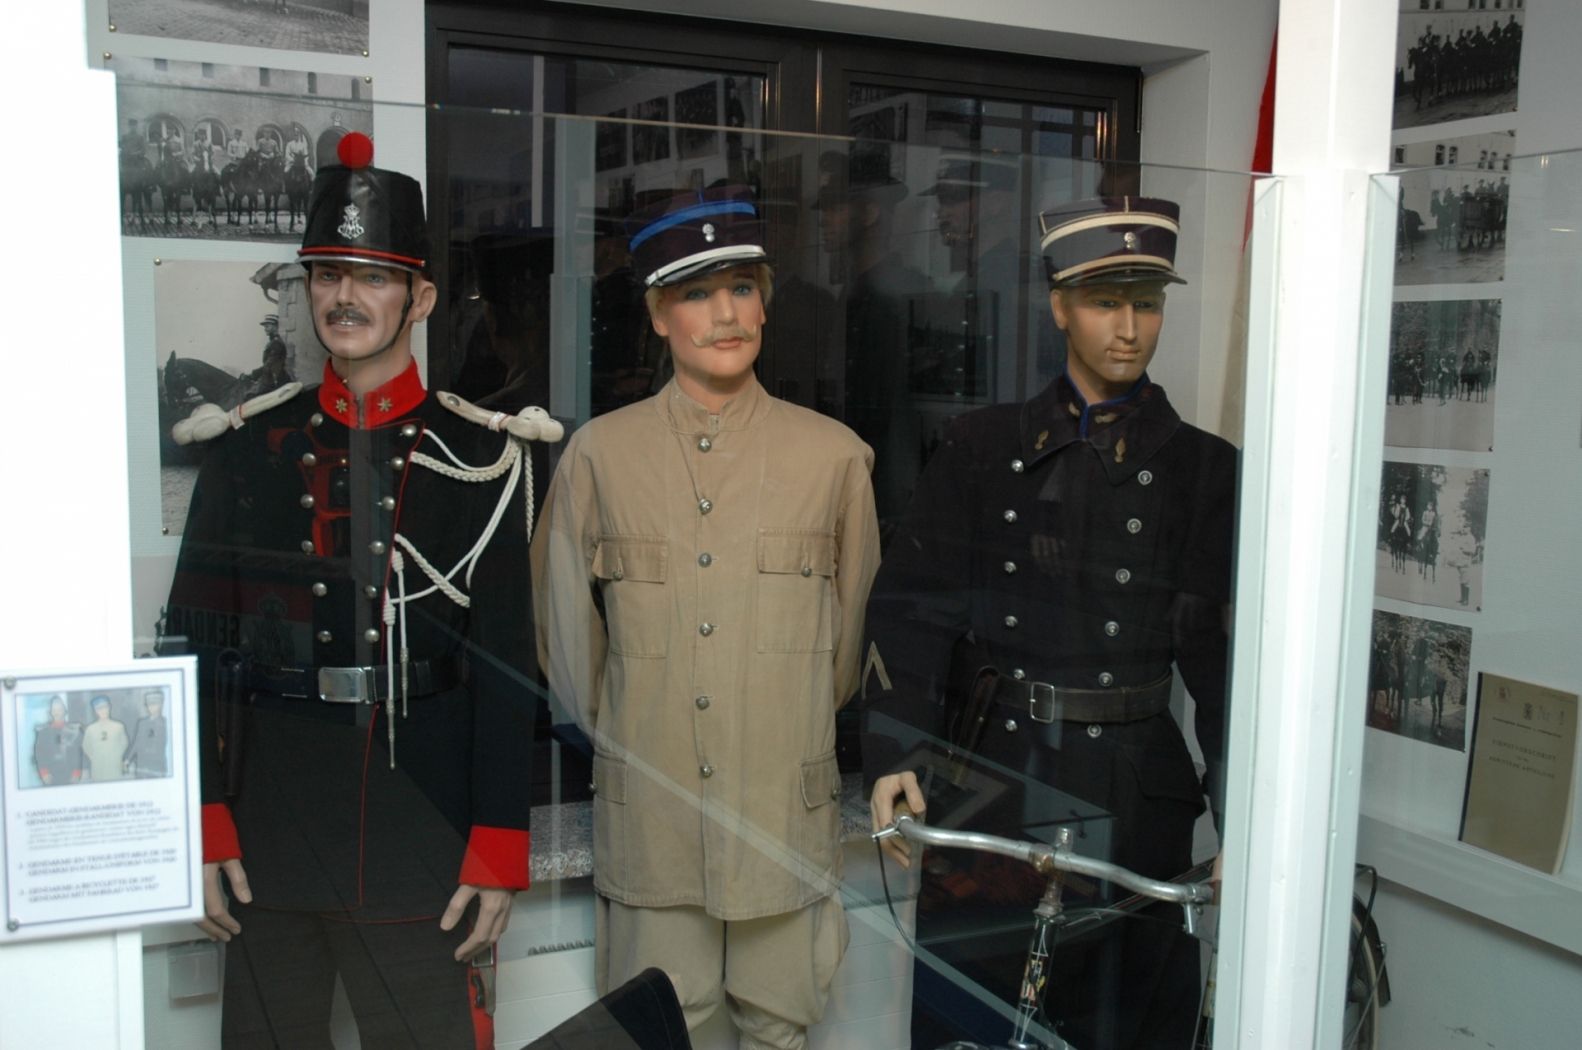 Musée International d'Effets de Gendarmerie et Police